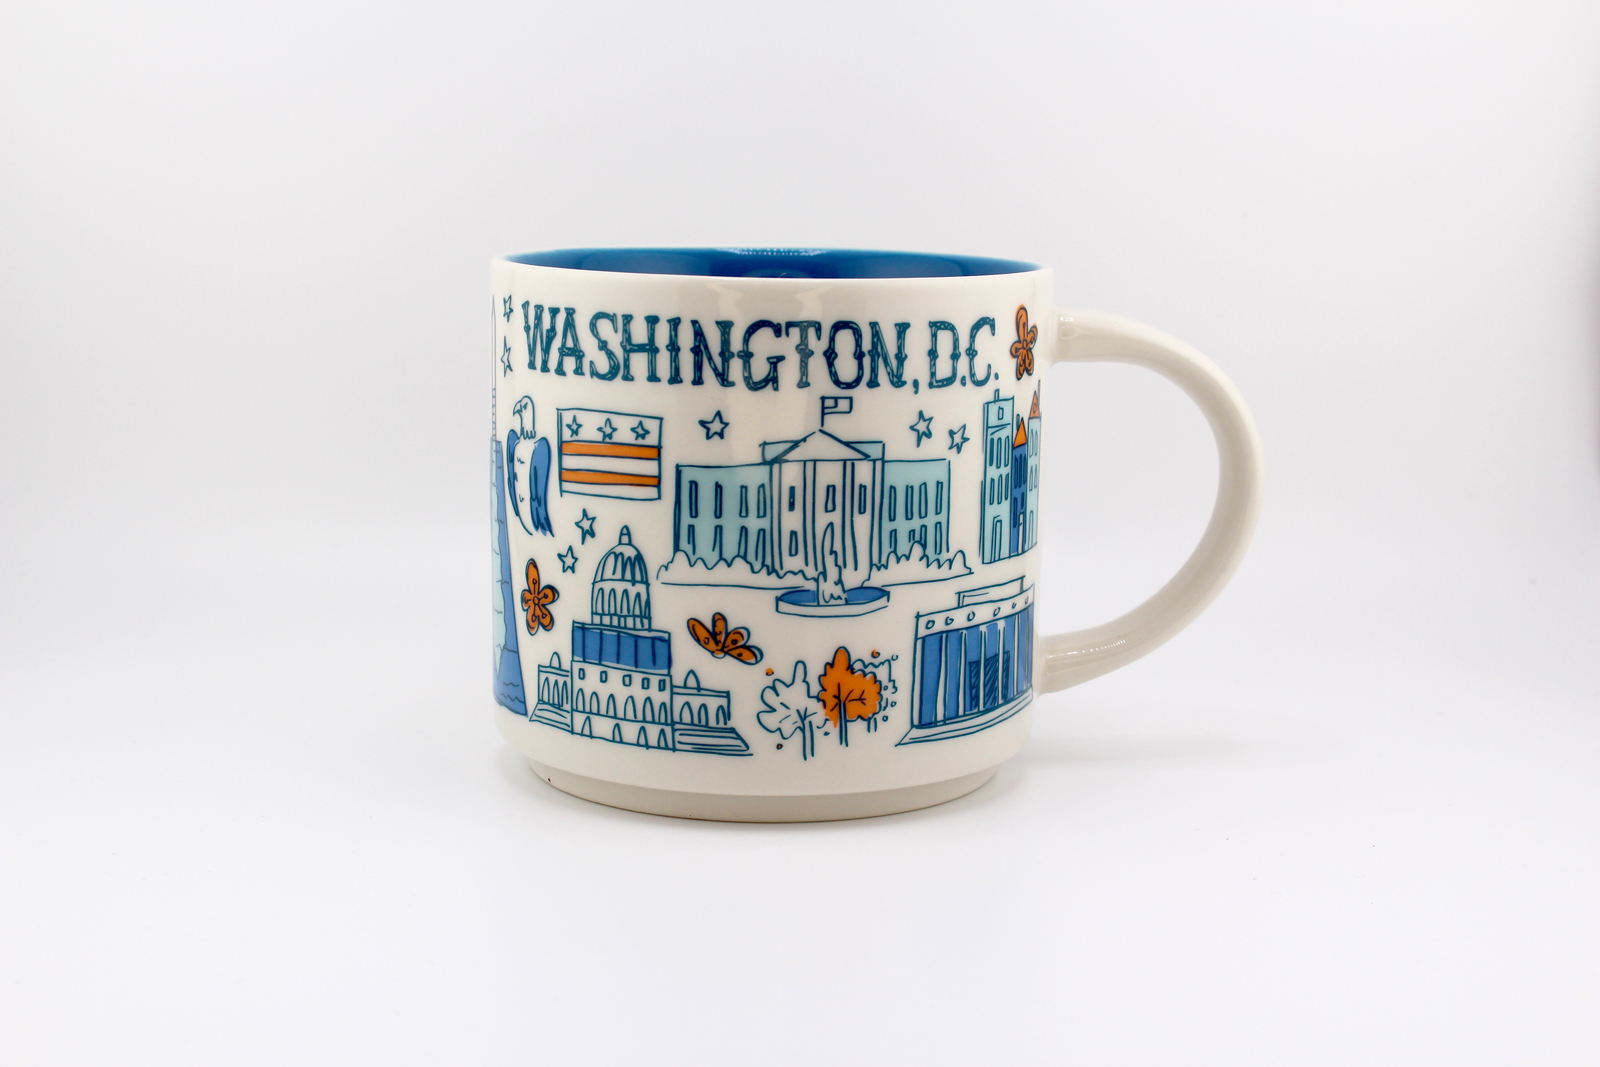 Washington D.C. Mug: Starbucks Been There Series